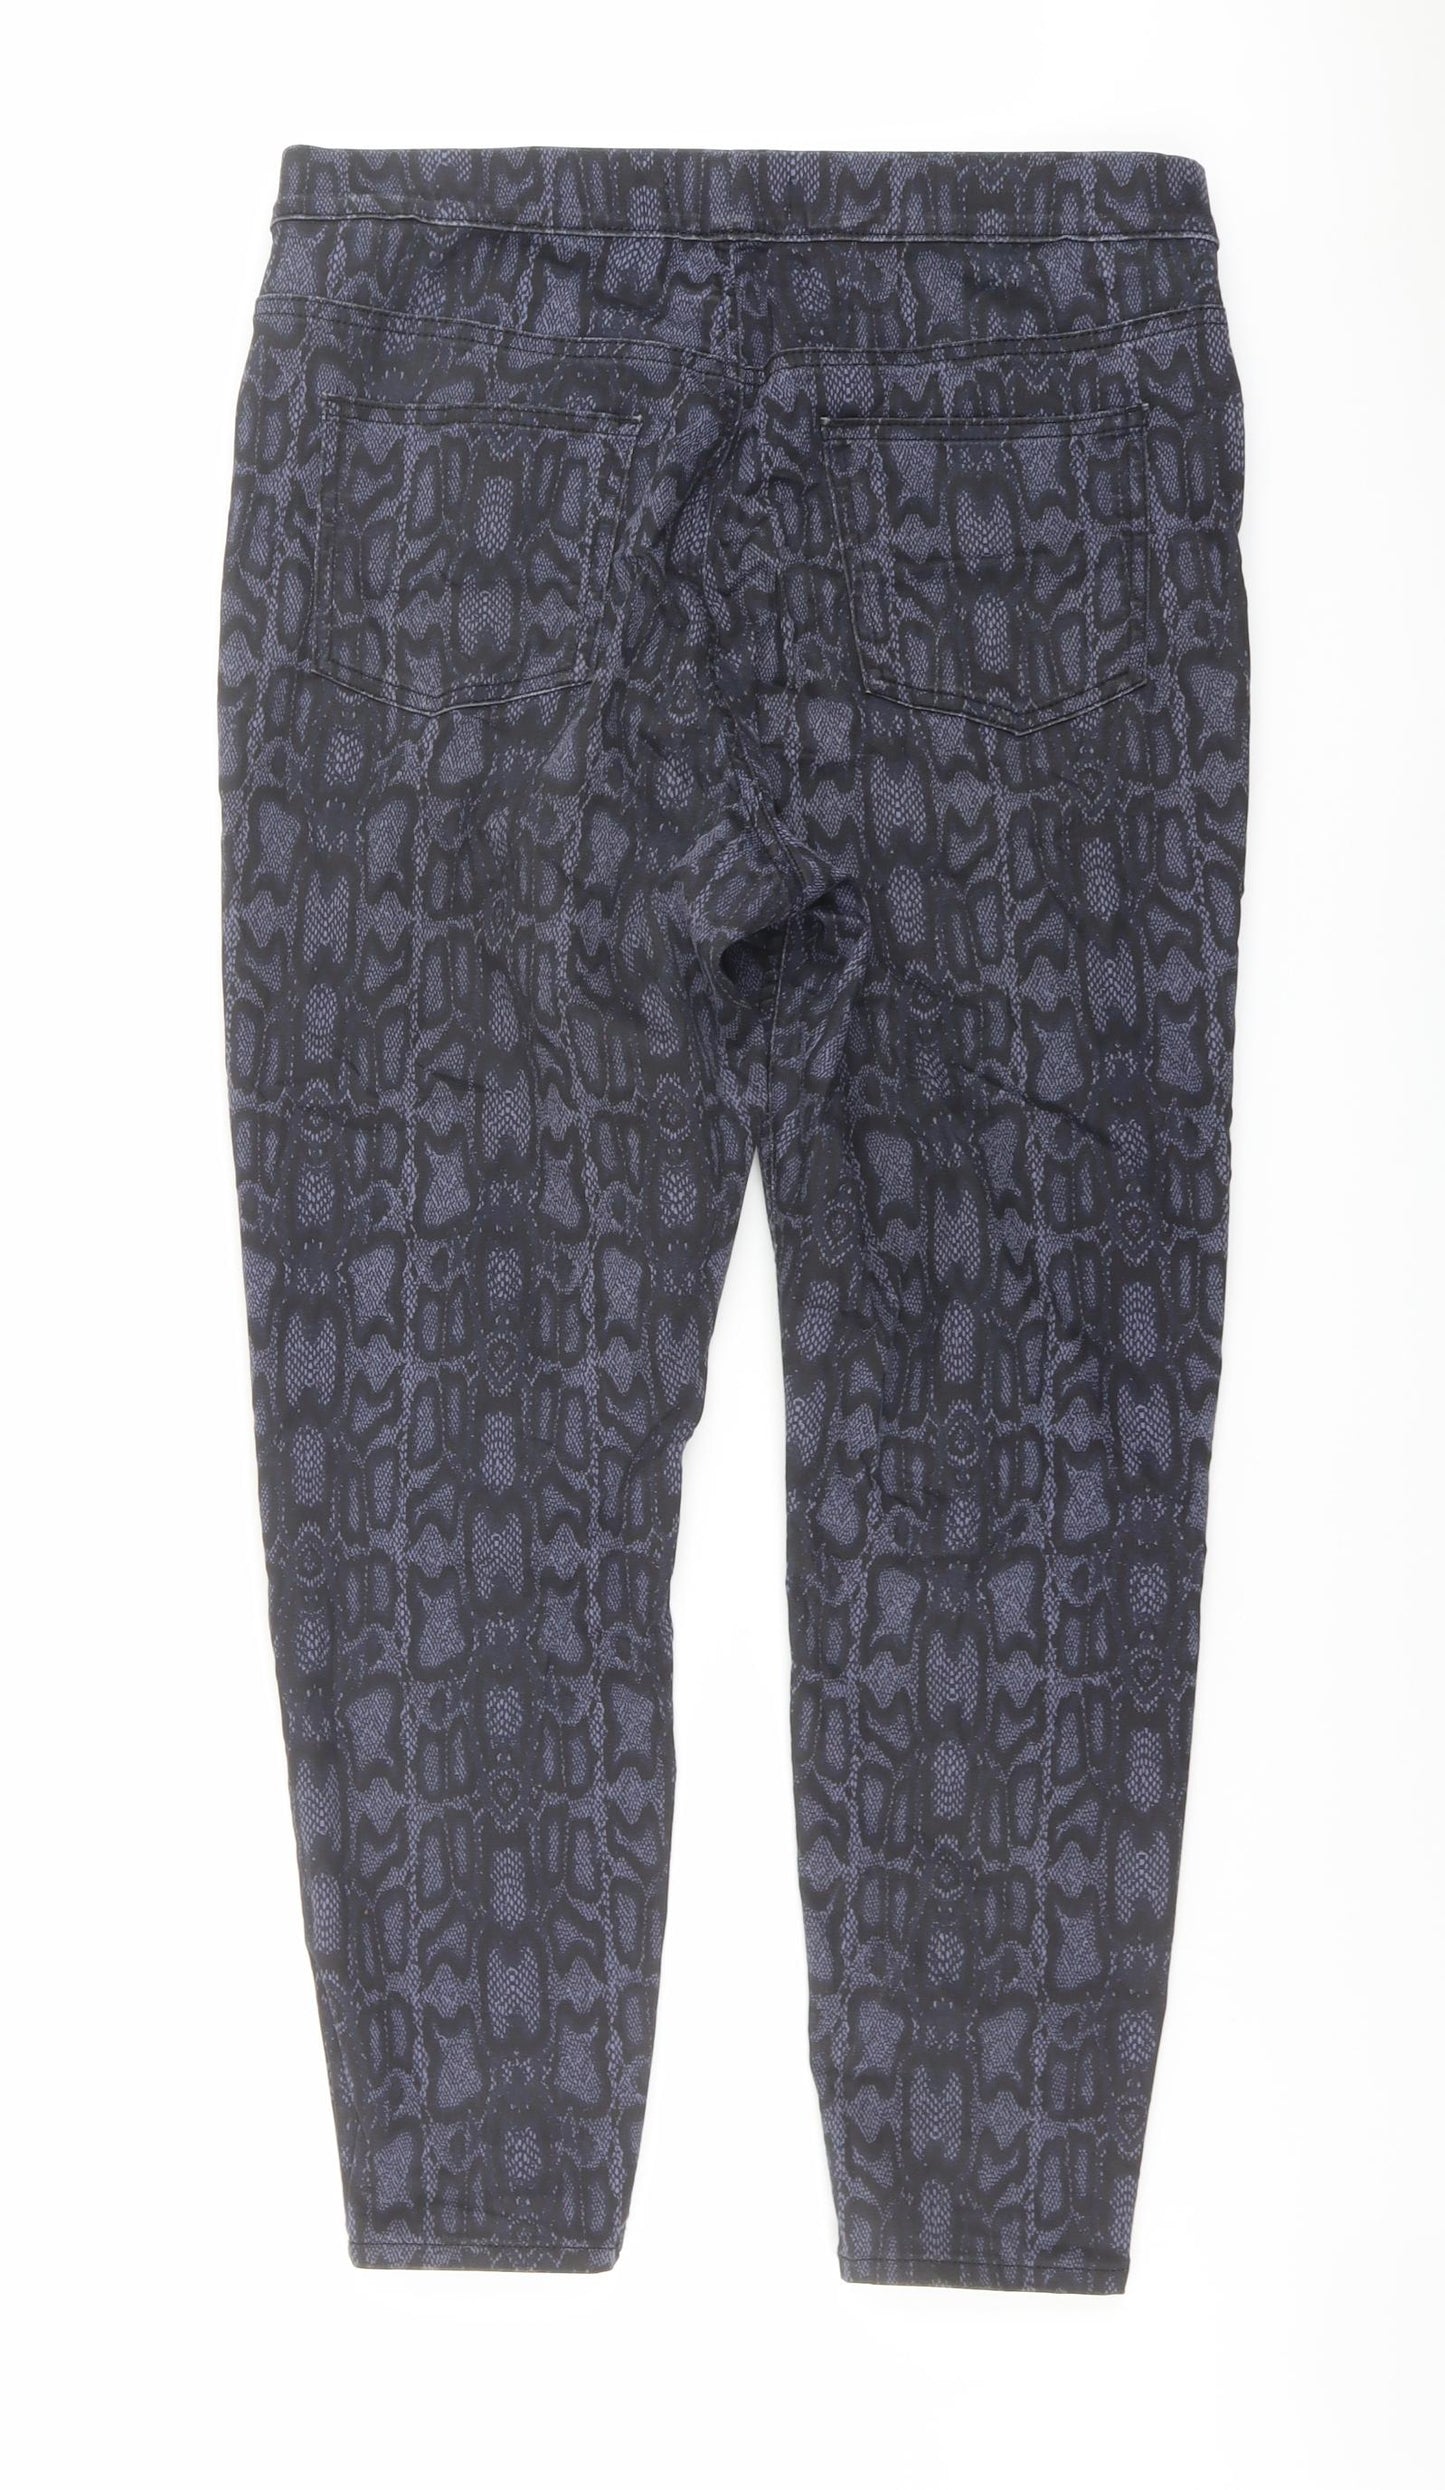 Marks and Spencer Womens Blue Animal Print Cotton Jegging Jeans Size 16 L25 in Regular - Snakeskin Pattern